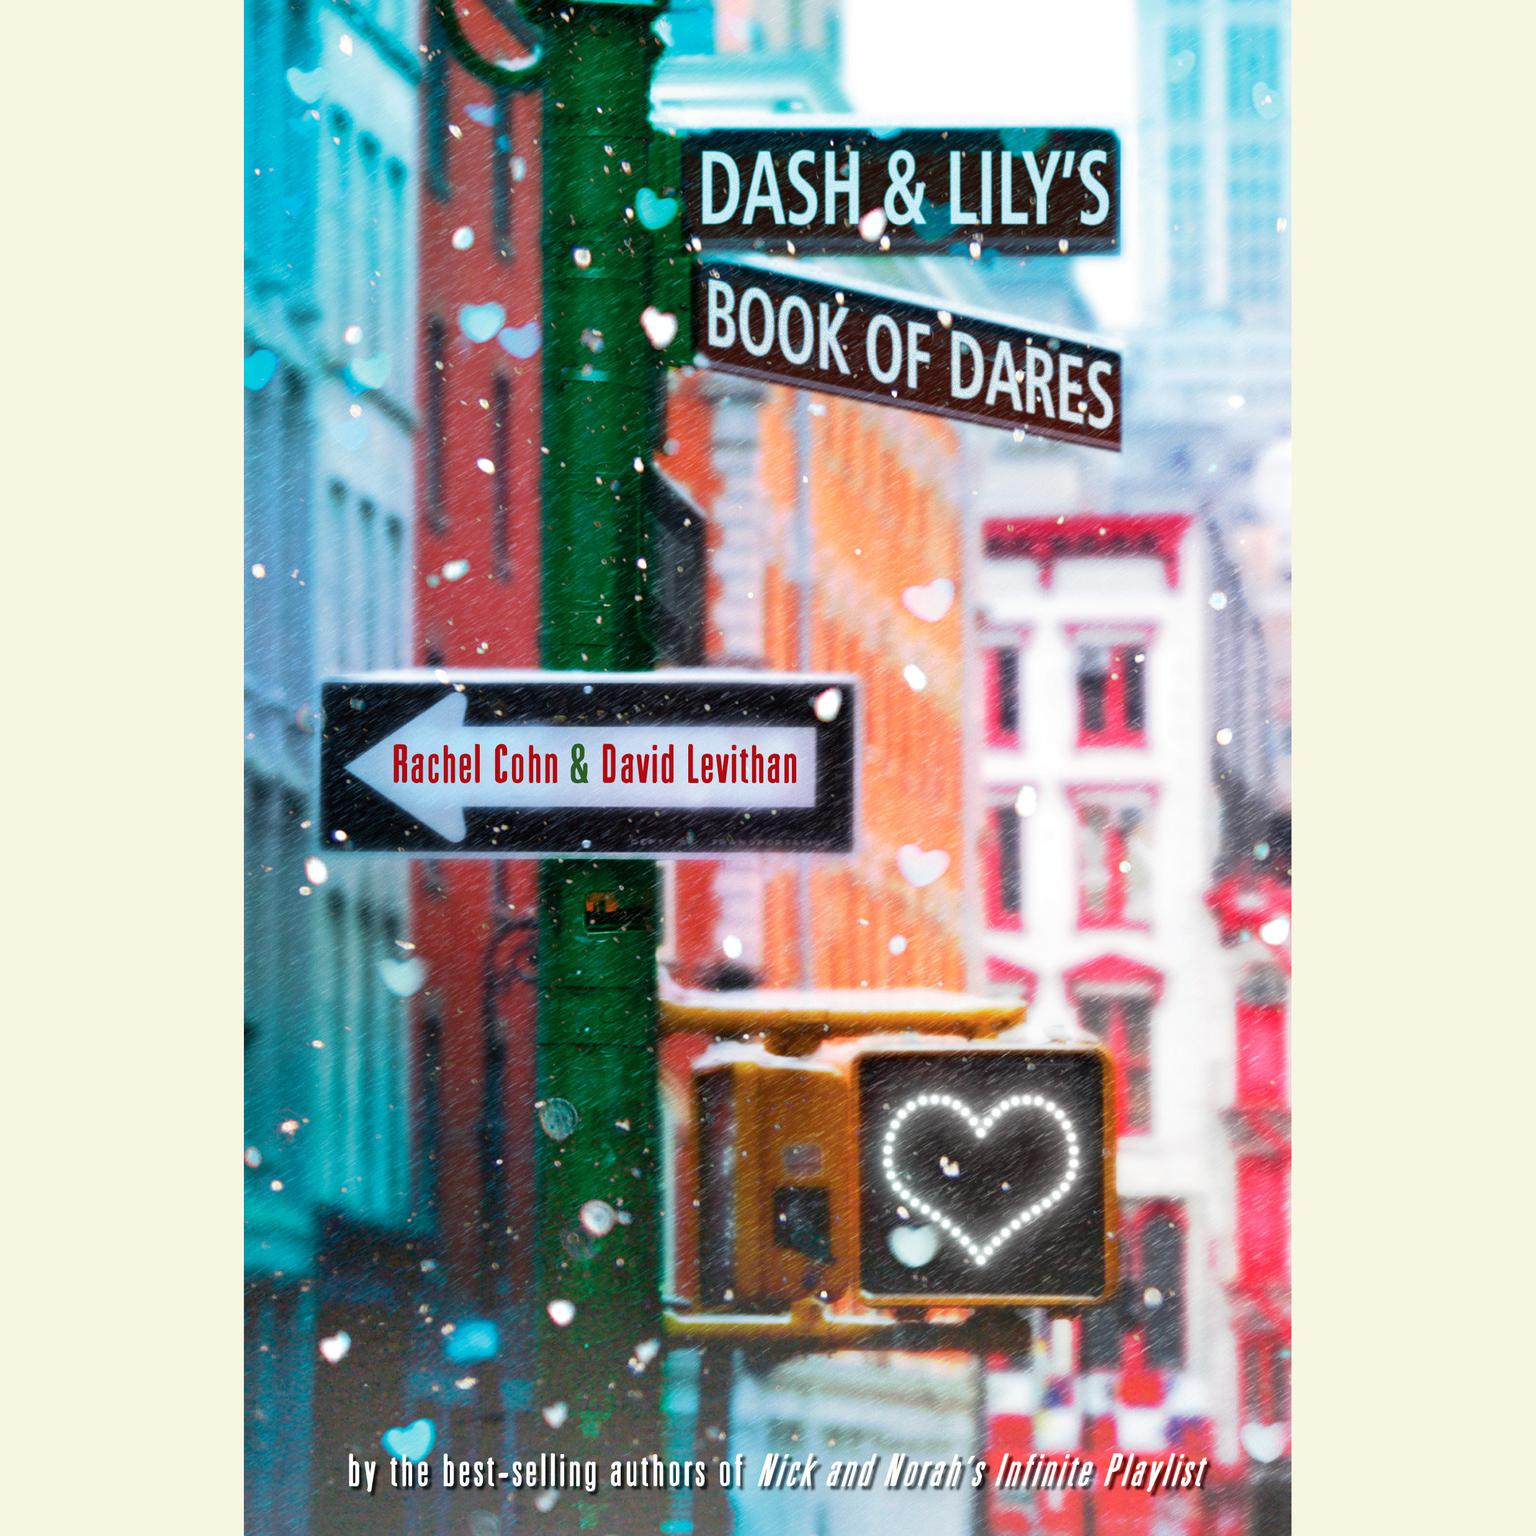 Dash & Lilys Book of Dares (Netflix Series Tie-In Edition) Audiobook, by Rachel Cohn